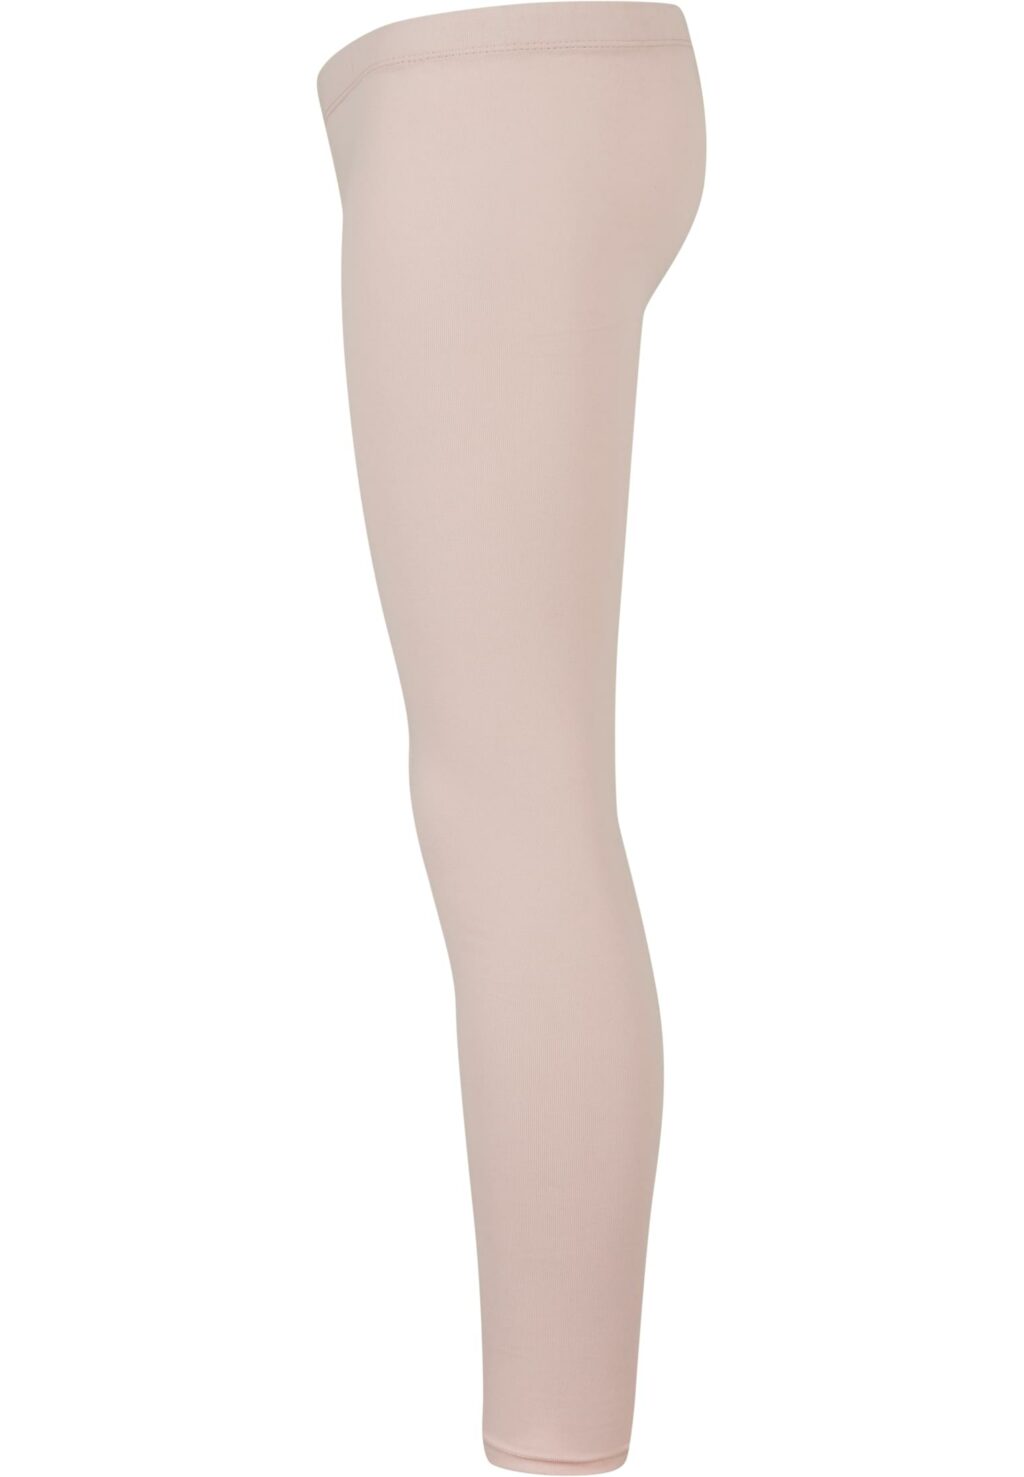 Girls Jersey Leggings 2-Pack pink/whitesand UCK605A